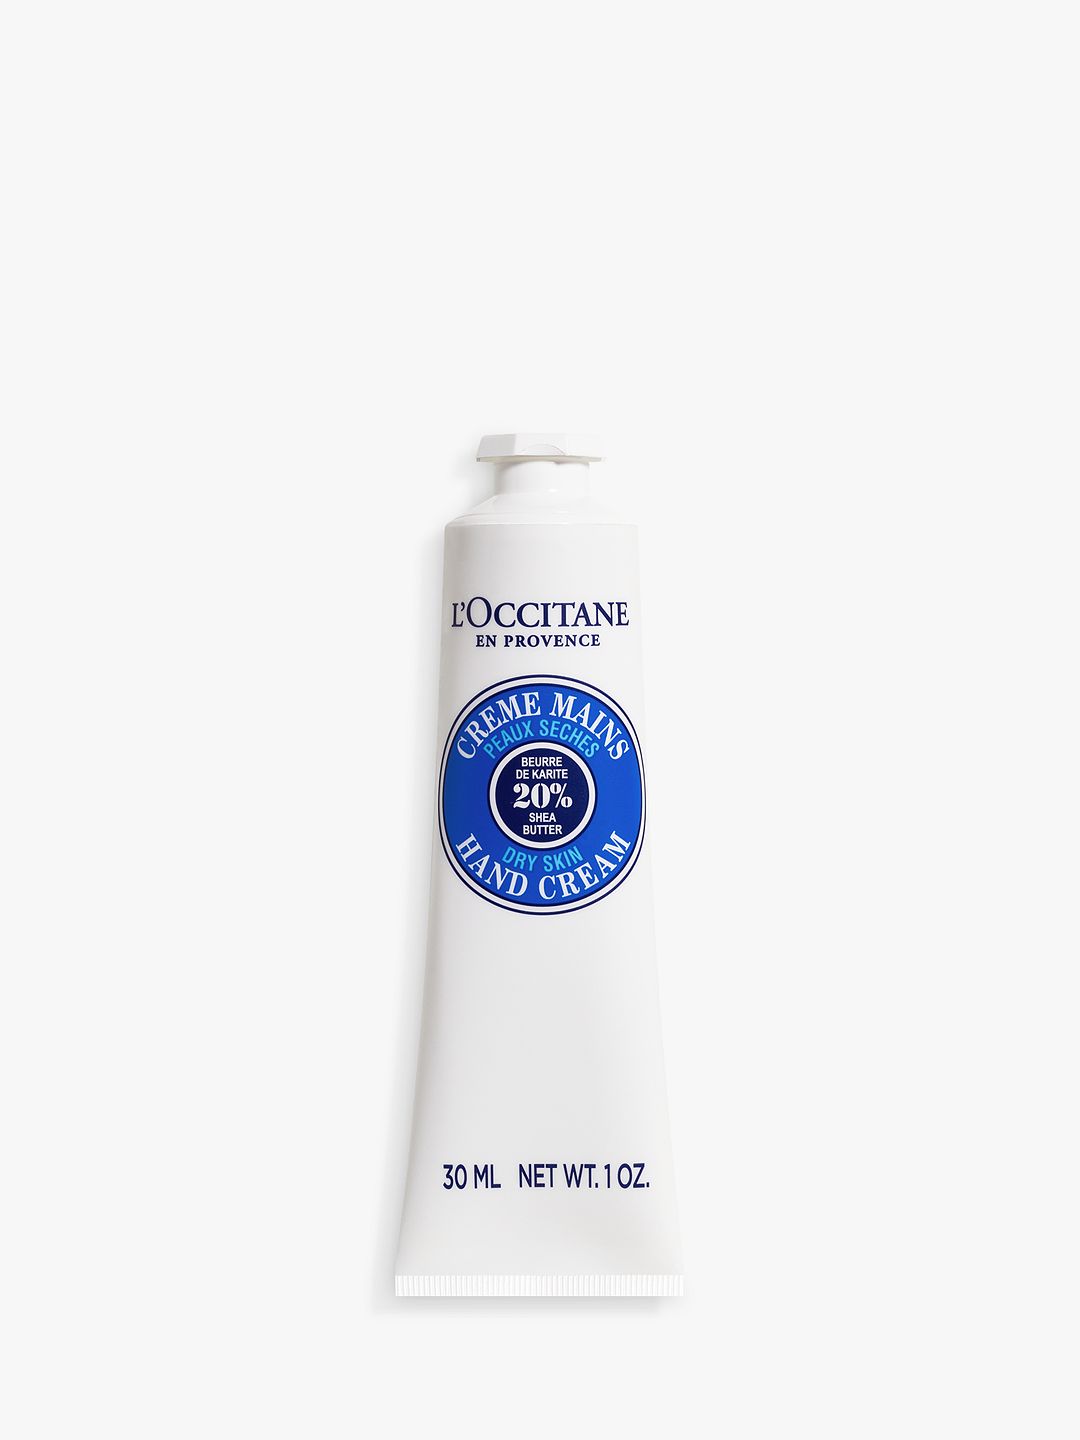 L'OCCITANE Shea Butter Hand Cream, 30ml 1